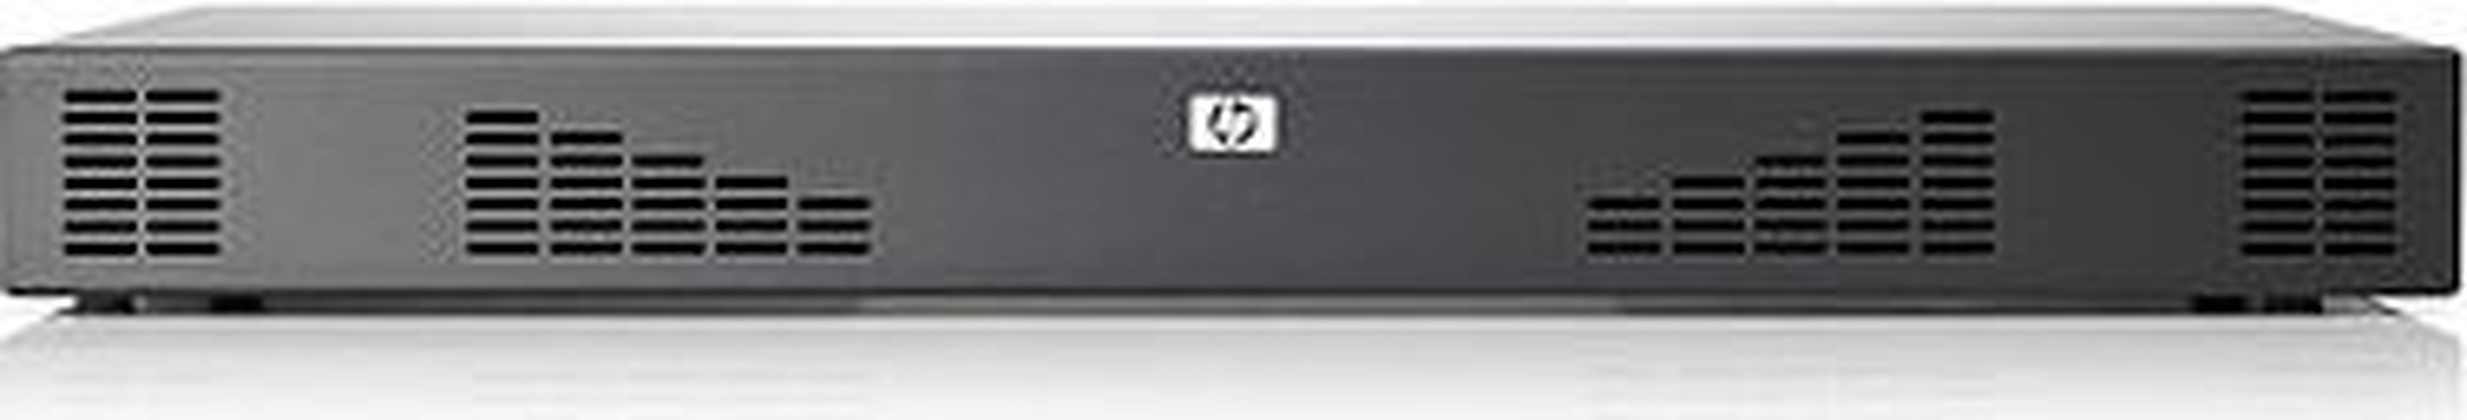 Переключатель KVM "HP" [AF623A] Console USB Virtual Media CAC Interface Adapter